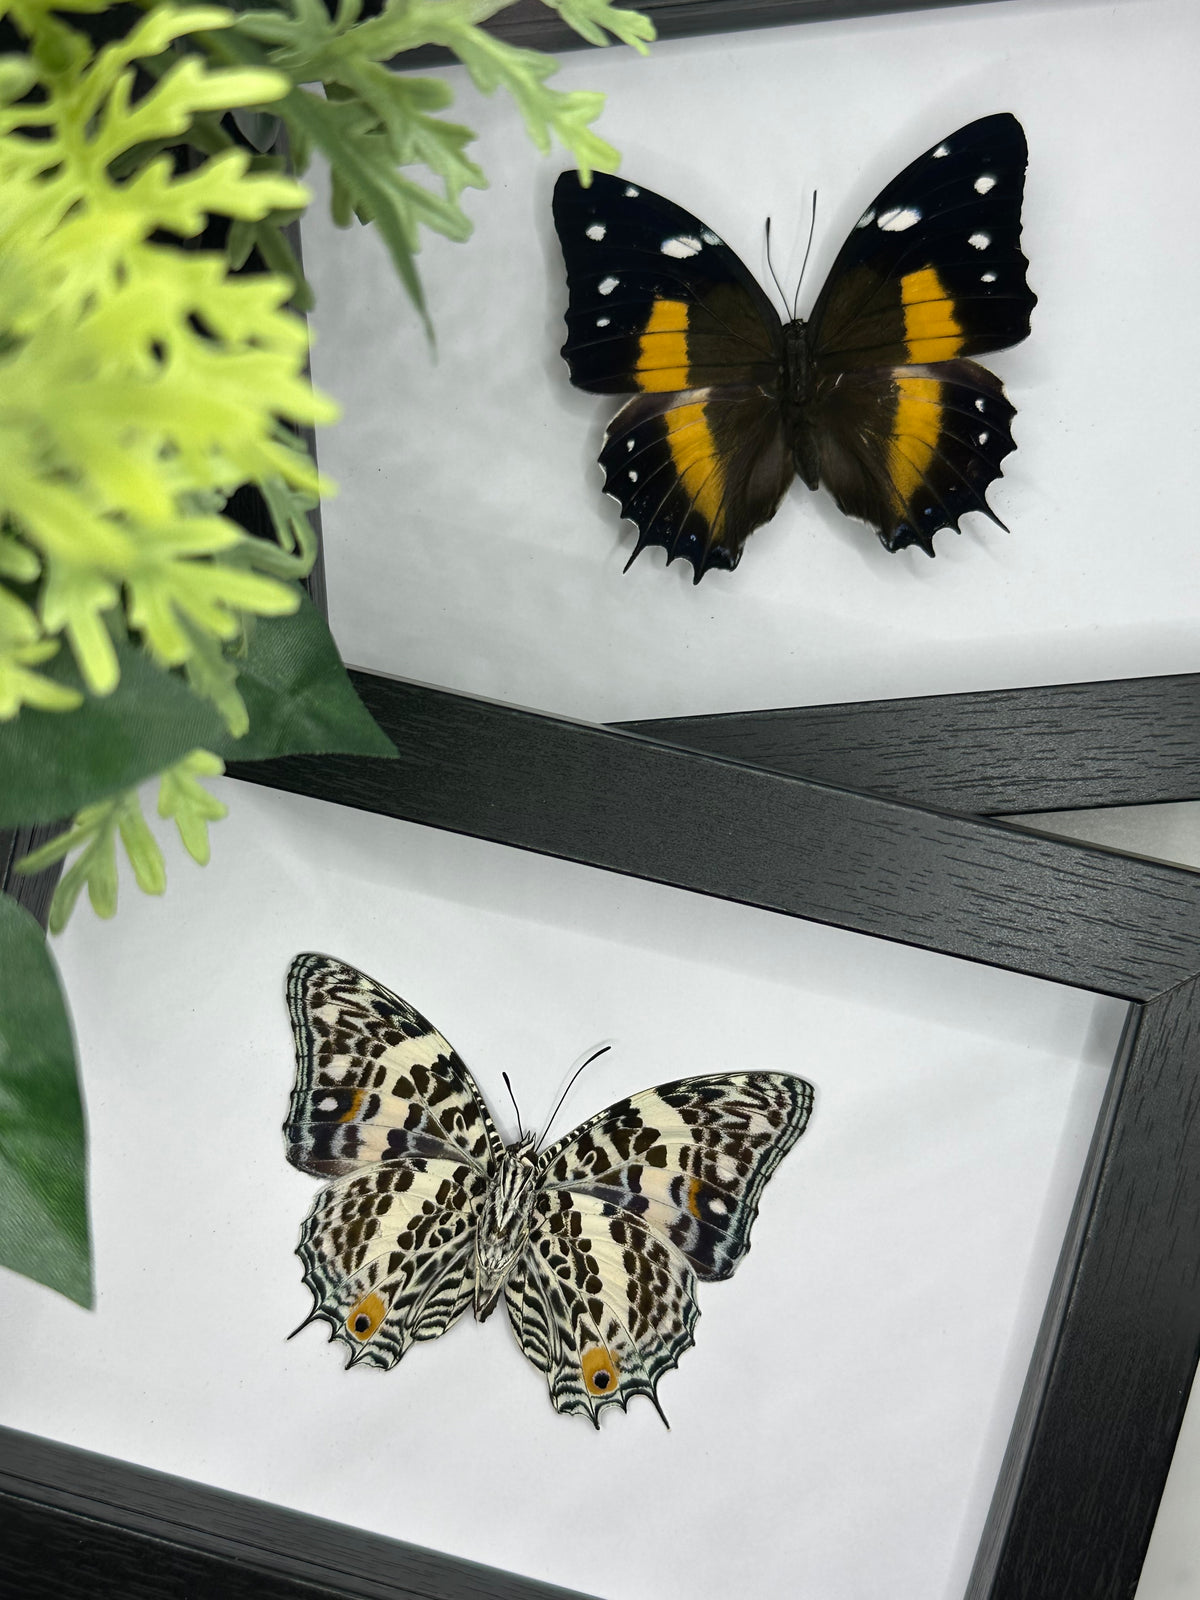 Baeotus Deucalion Butterfly in a frame